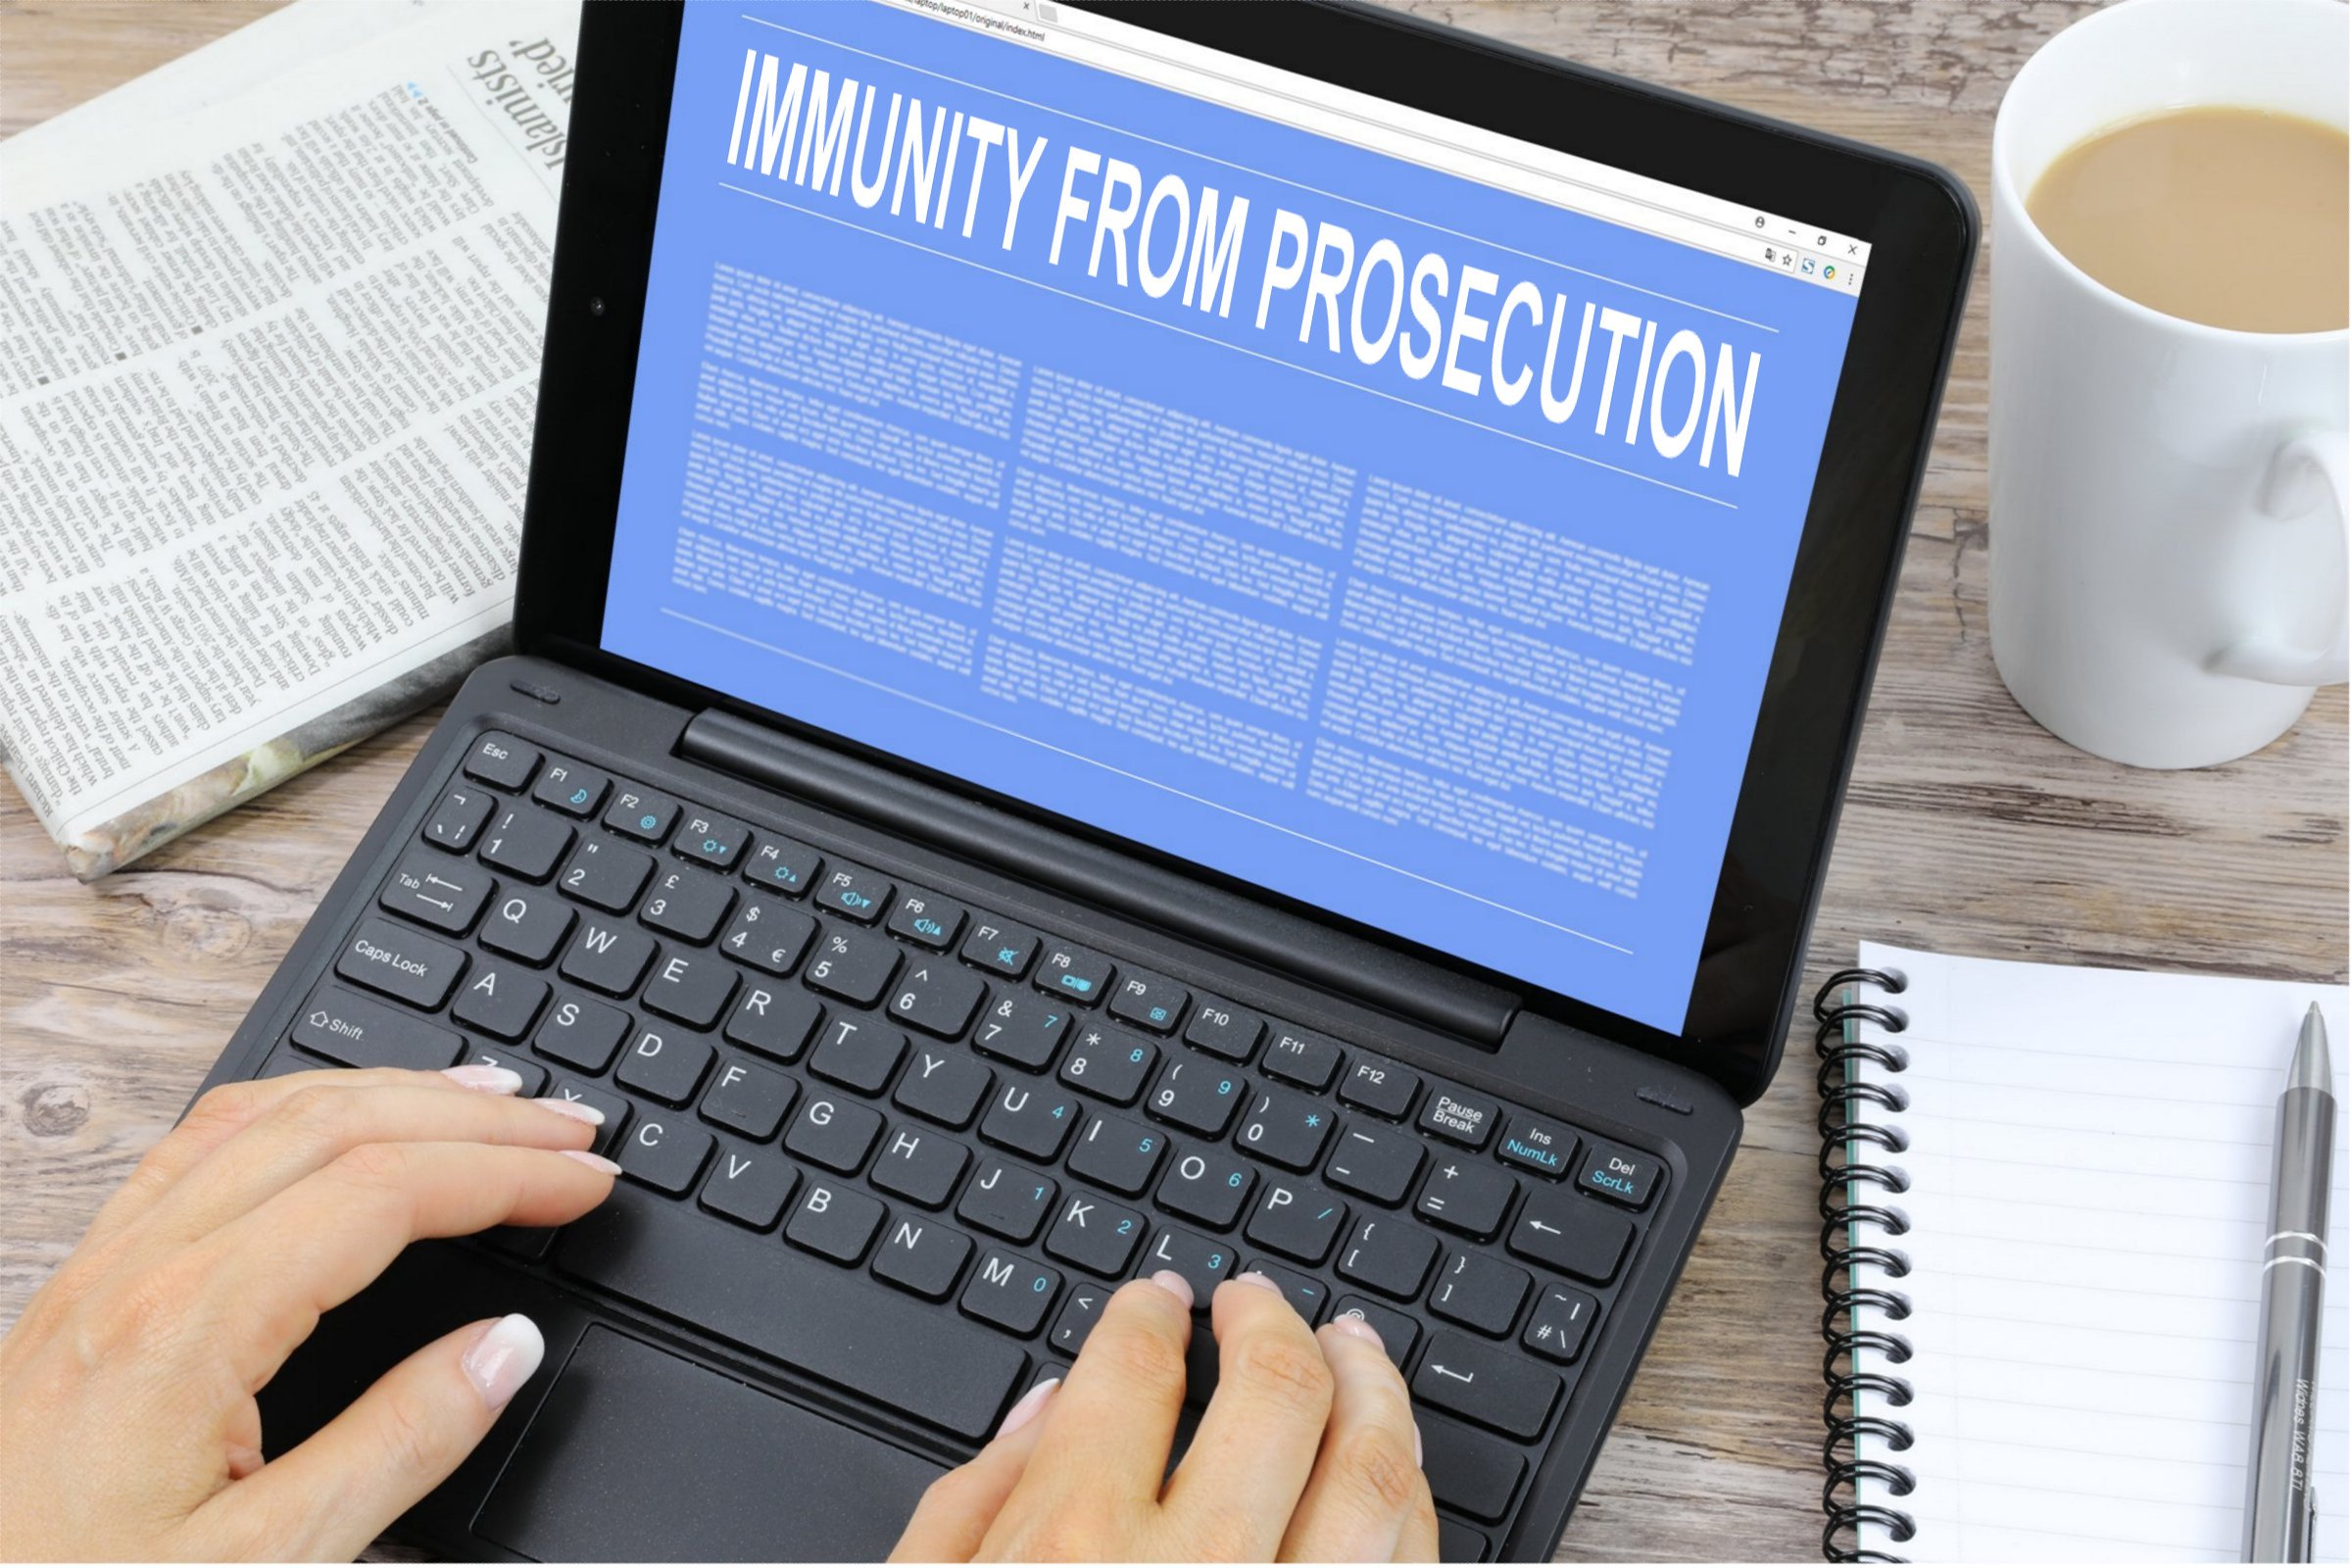 Immunity From Prosecution